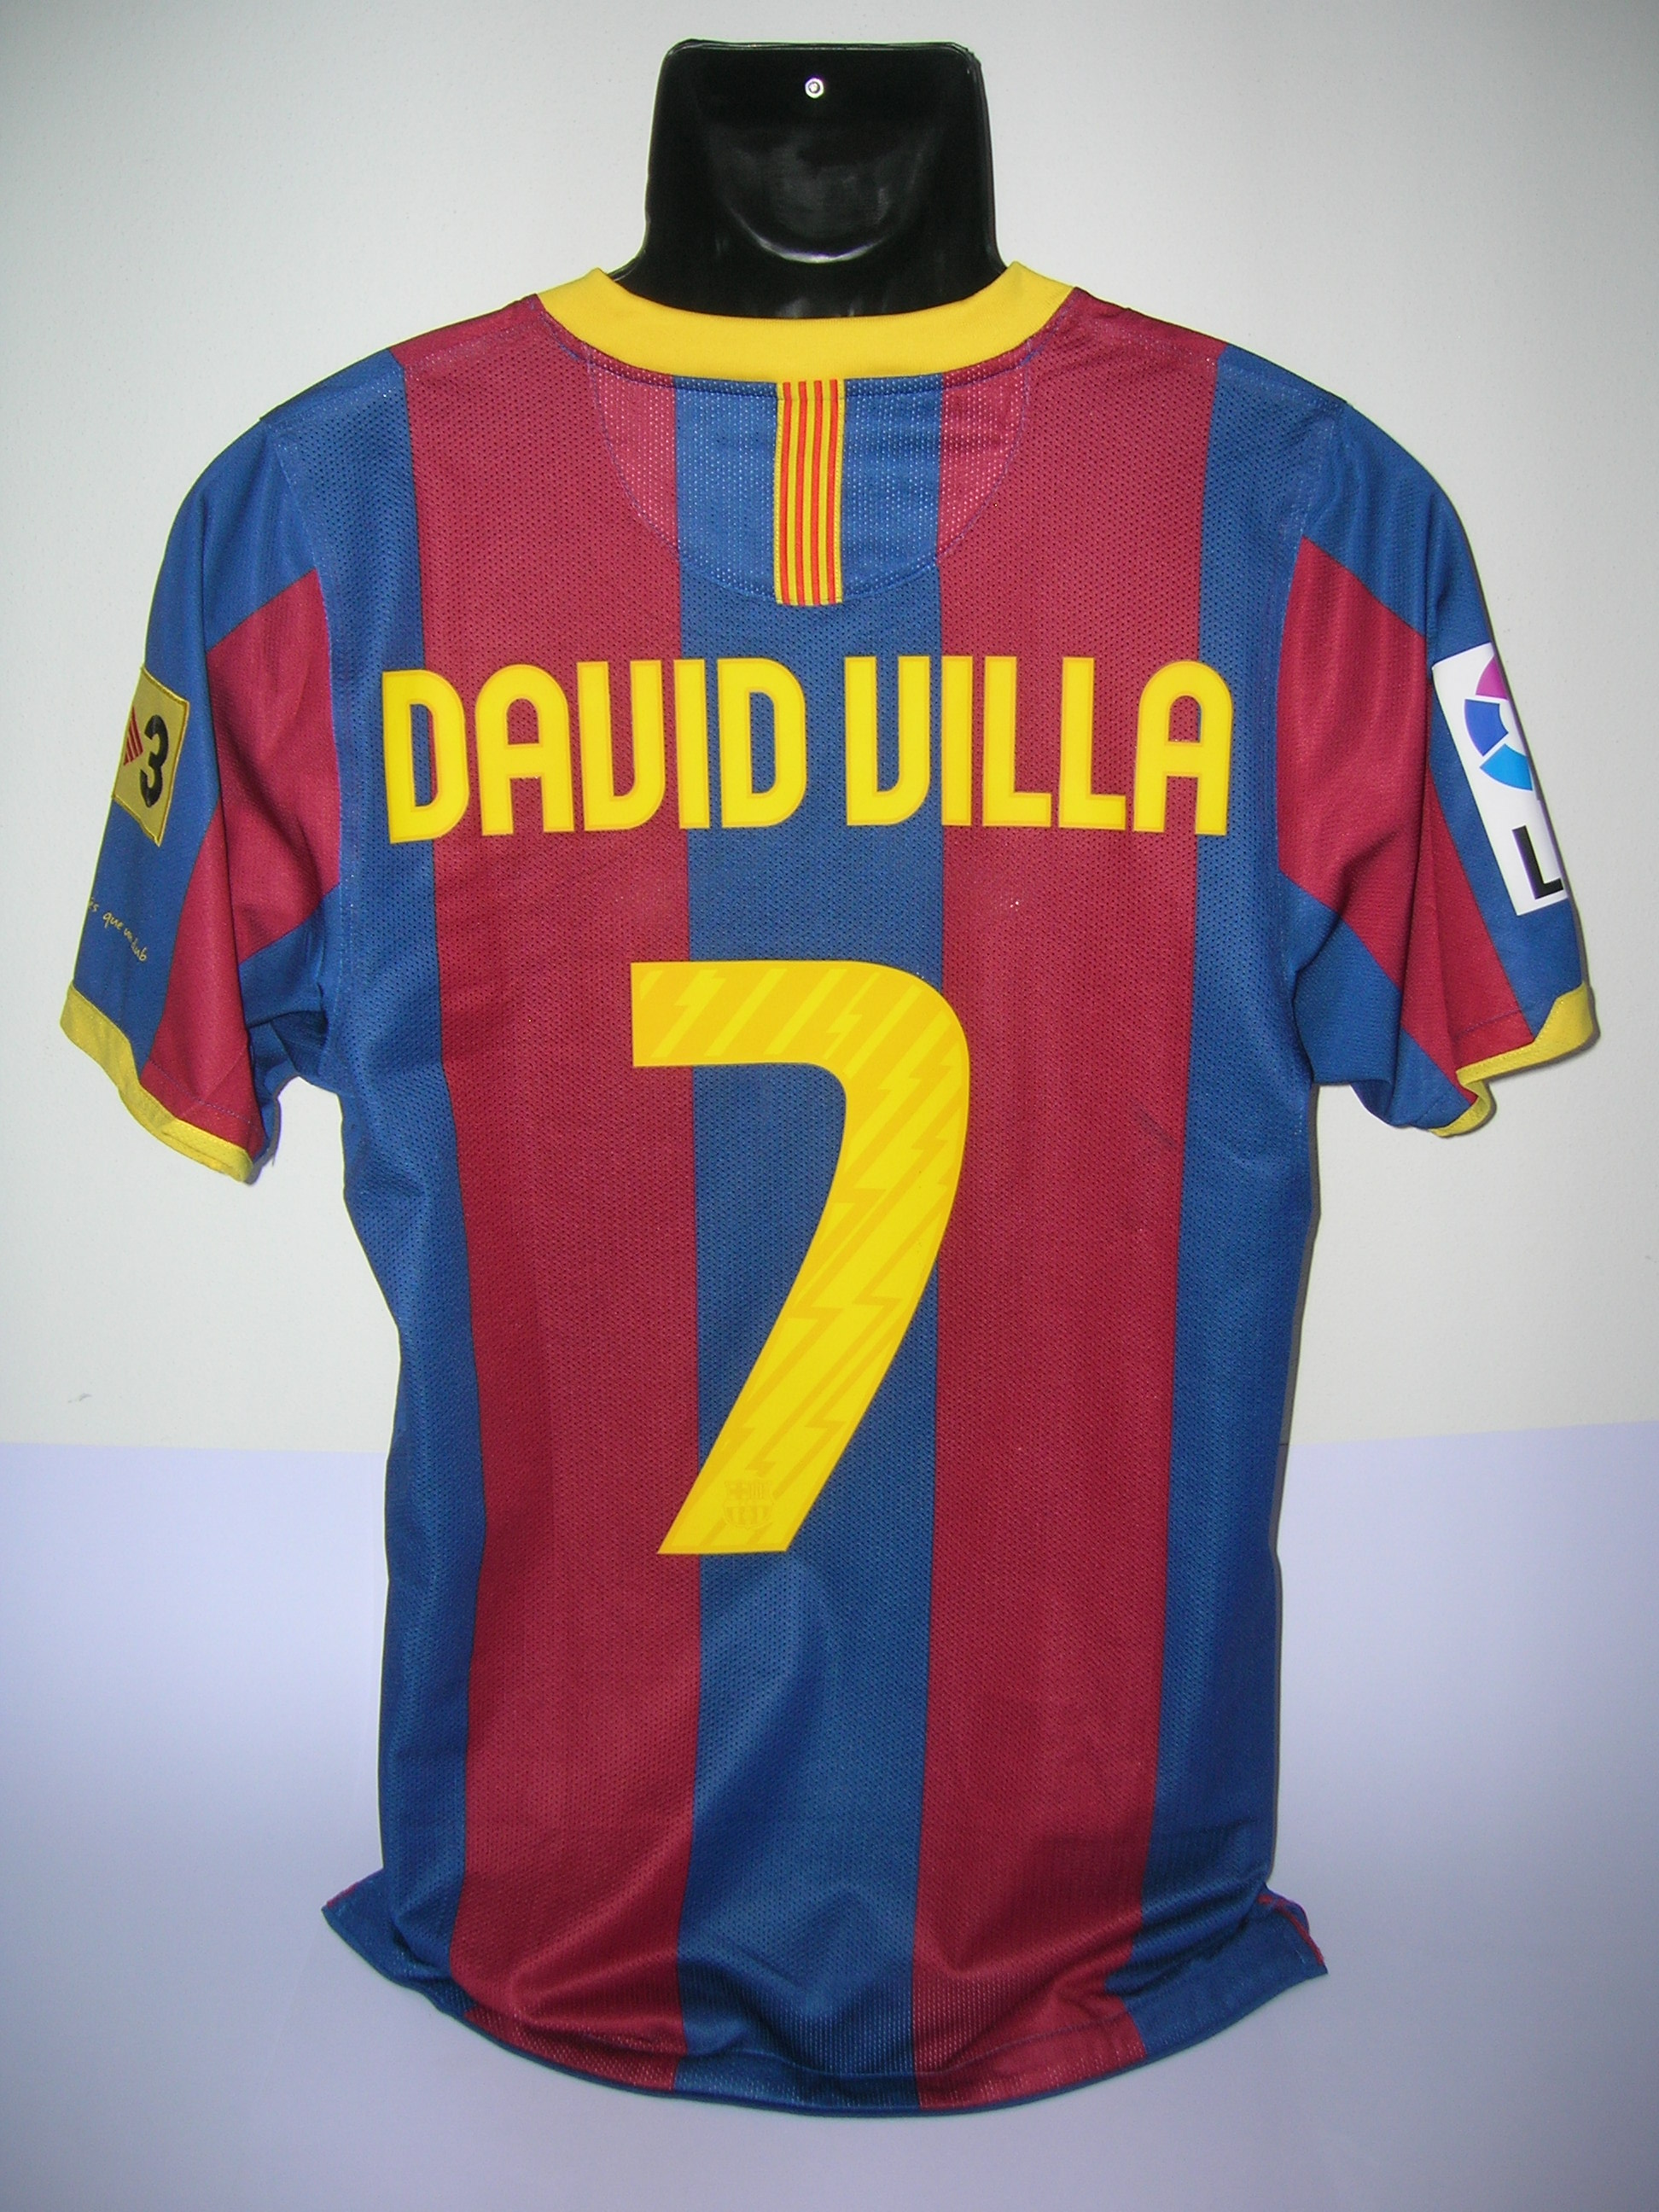 Davida Villa 7 - Barcelona 2011 B